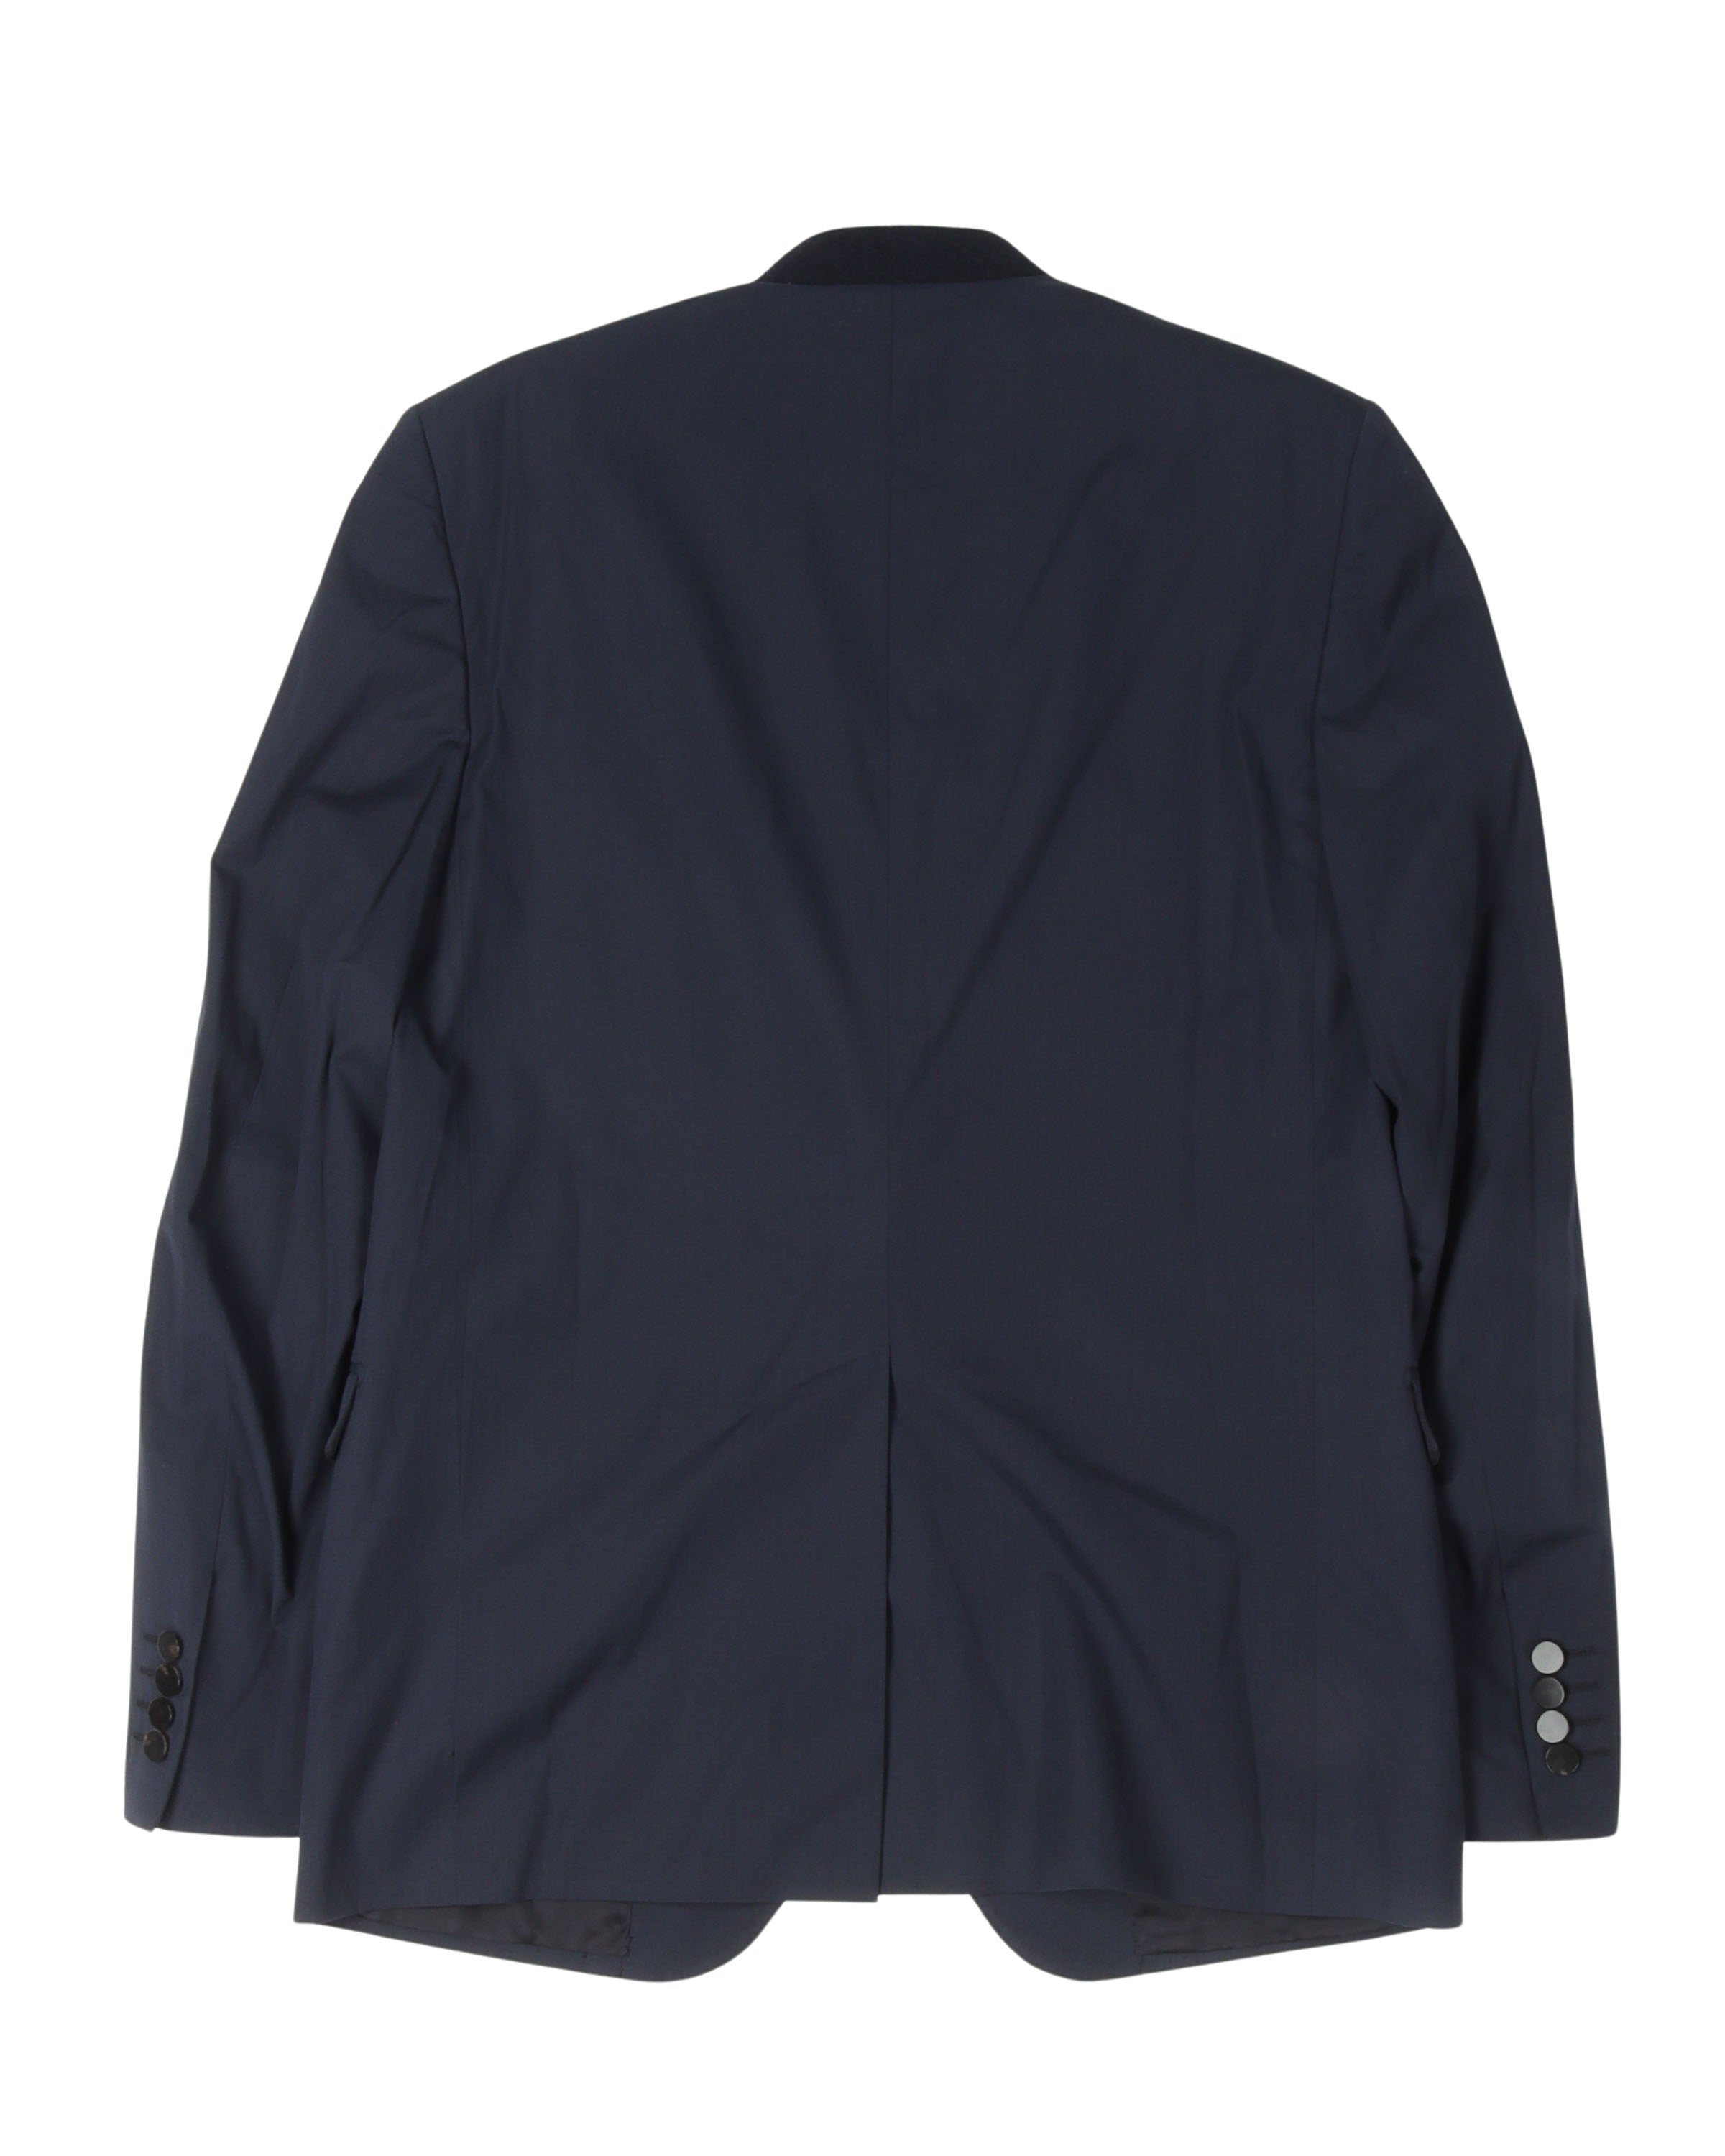 Deconstructed Blazer Jacket